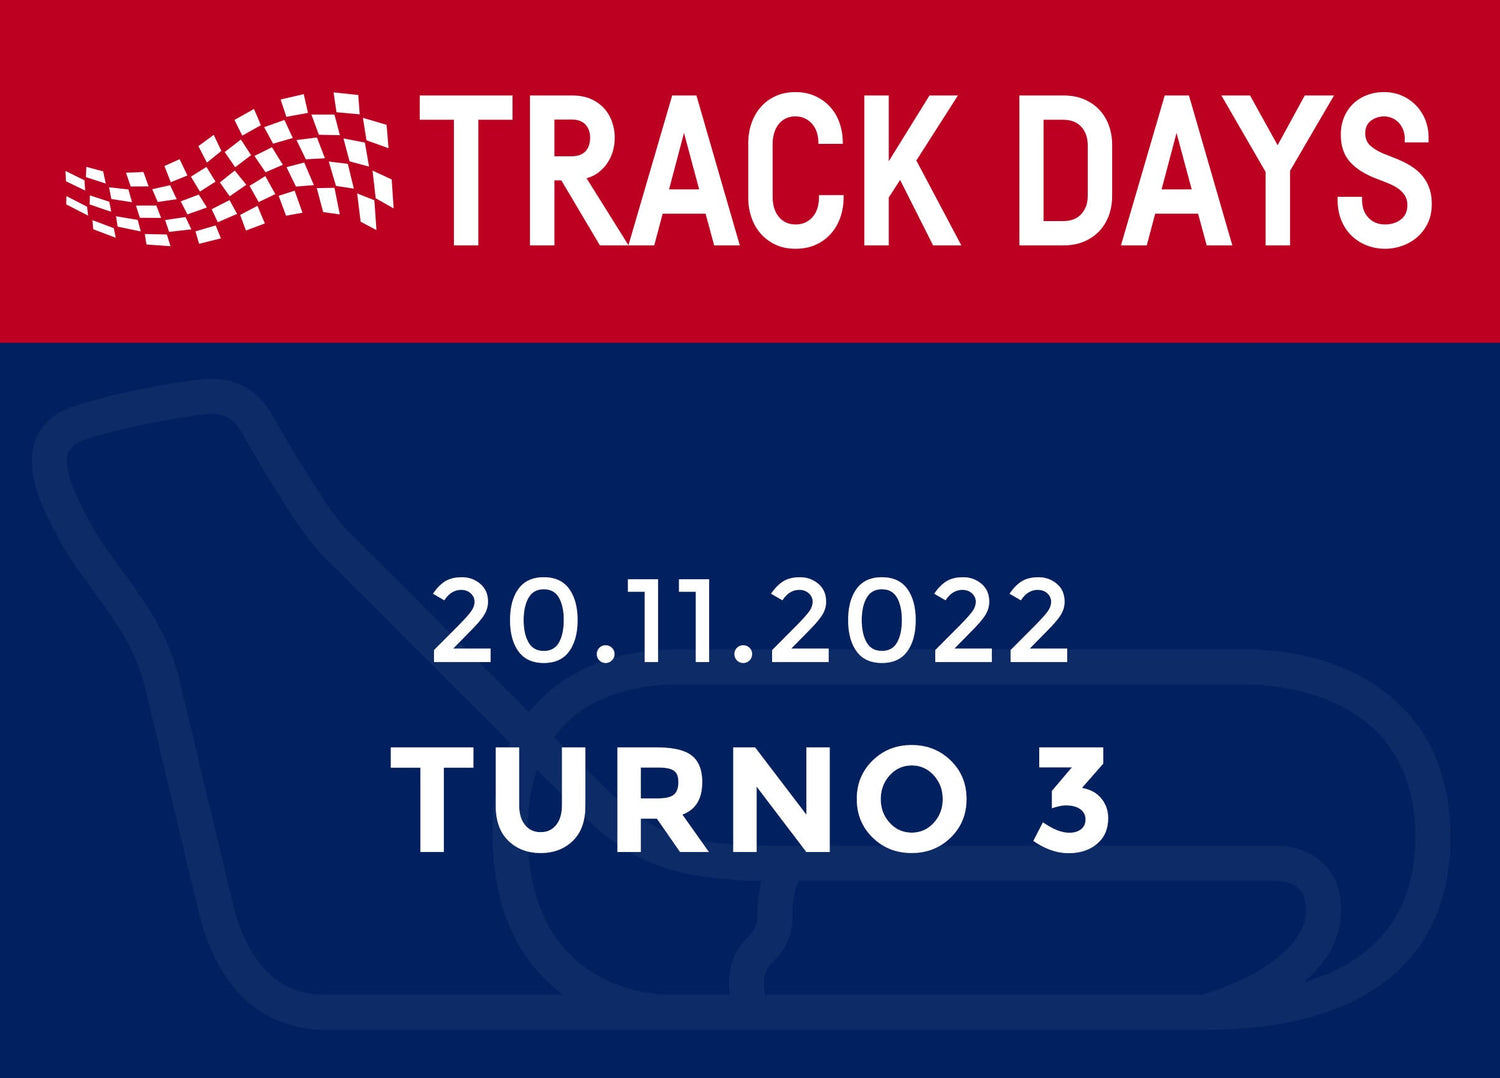 TRACK DAYS 20.11.22 TURNO 3